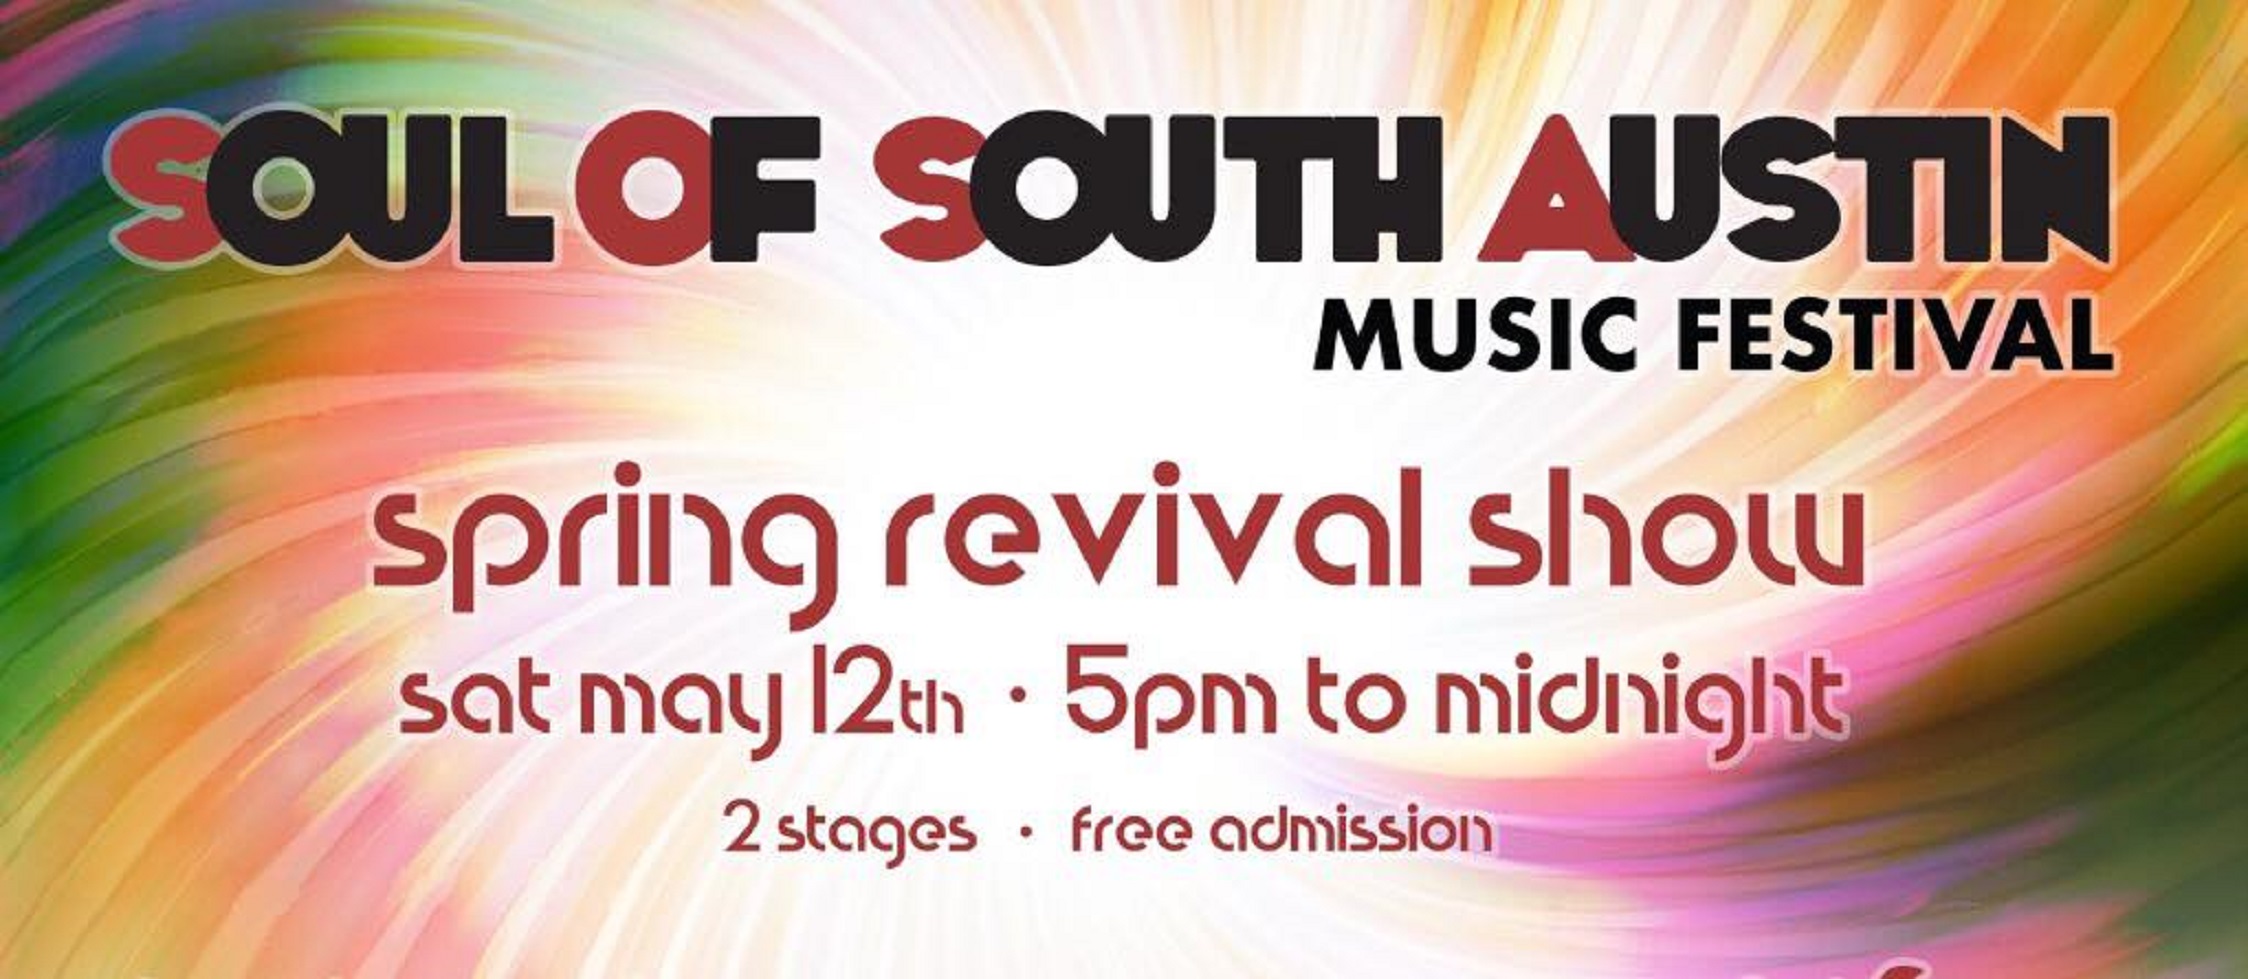 SOUL OF SOUTH AUSTIN MUSIC FESTIVAL III ANNOUNCES LINEUP